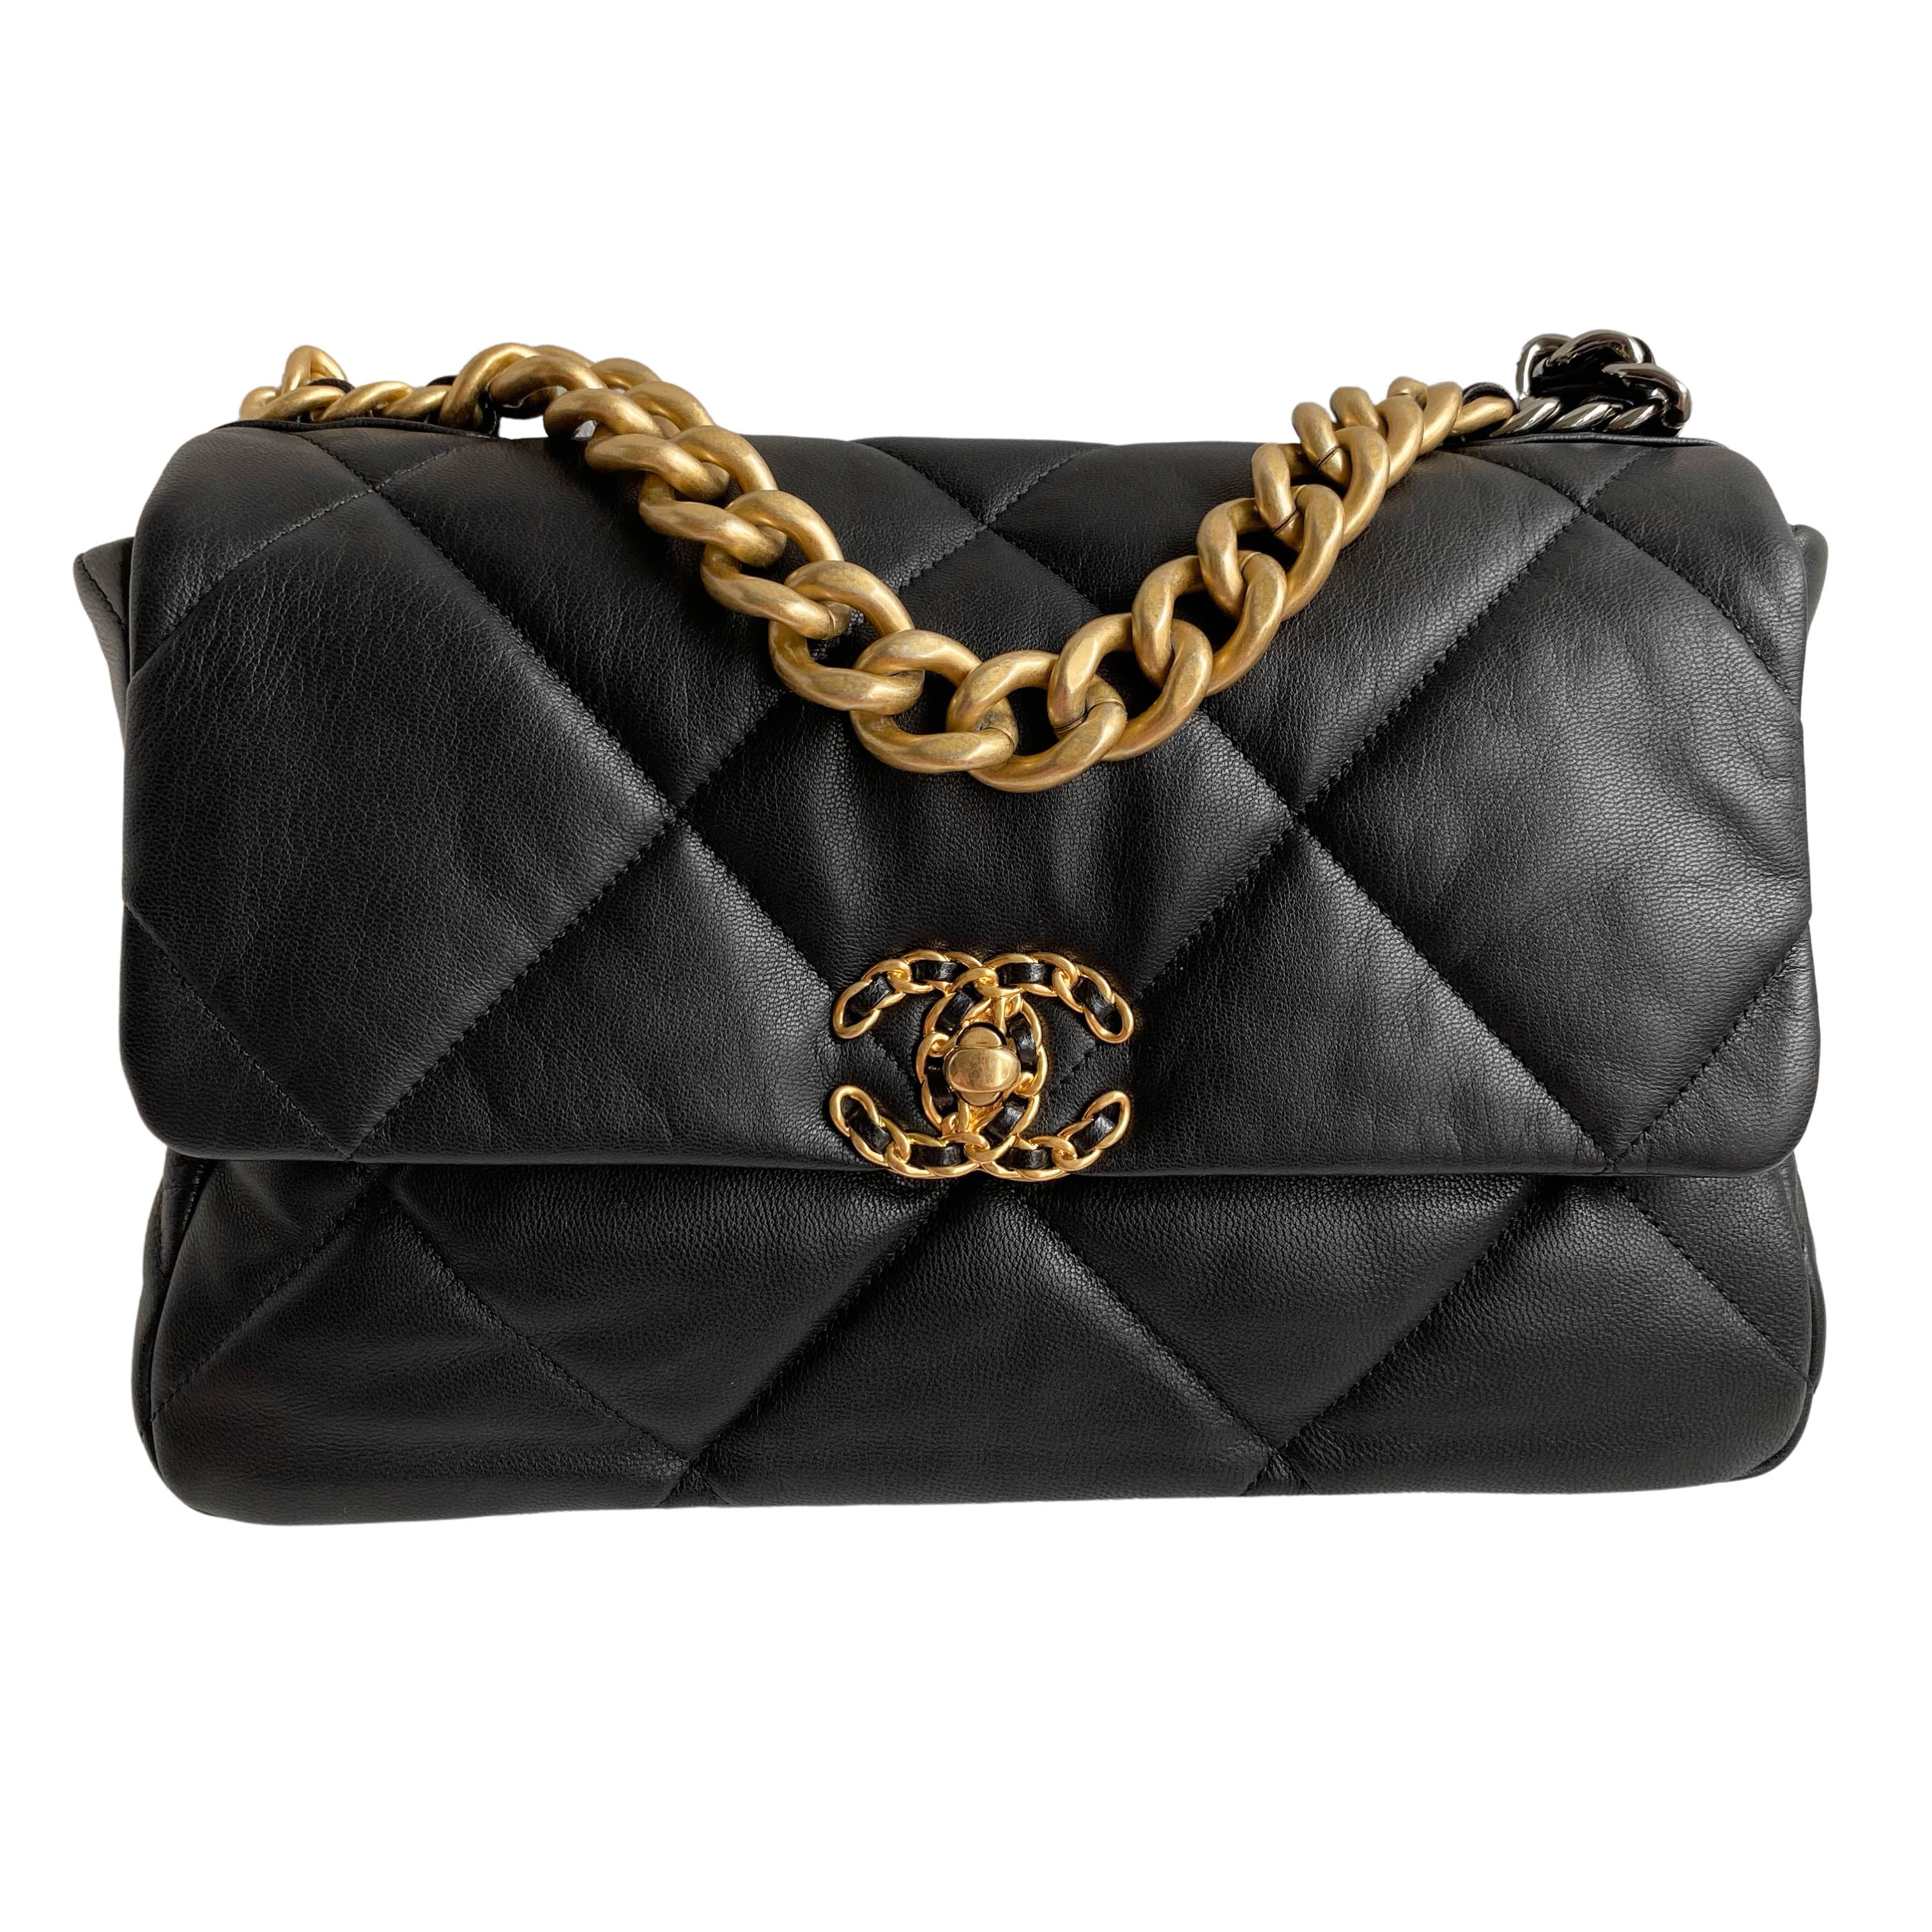 Chanel 19 Medium Flap Bag in Black Goatskin